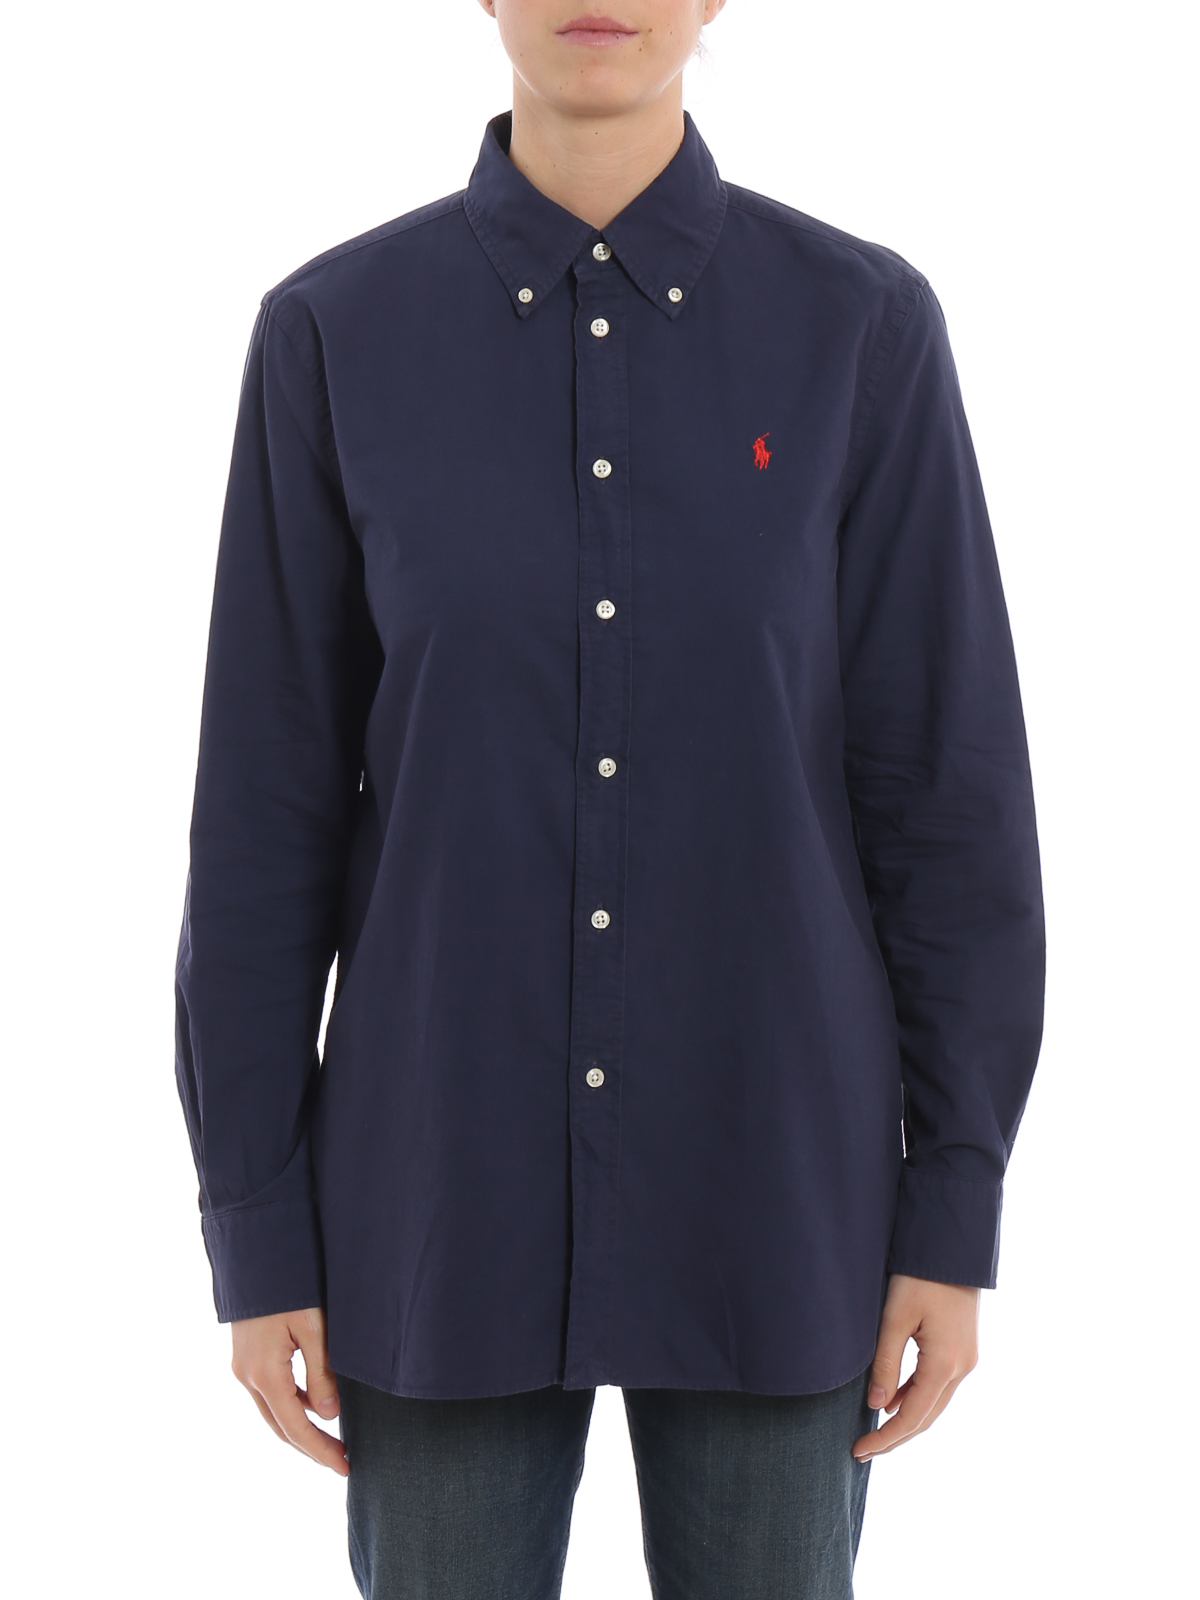 Shirts Polo Ralph Lauren - Oxford dark blue button-down shirt - 211732598001